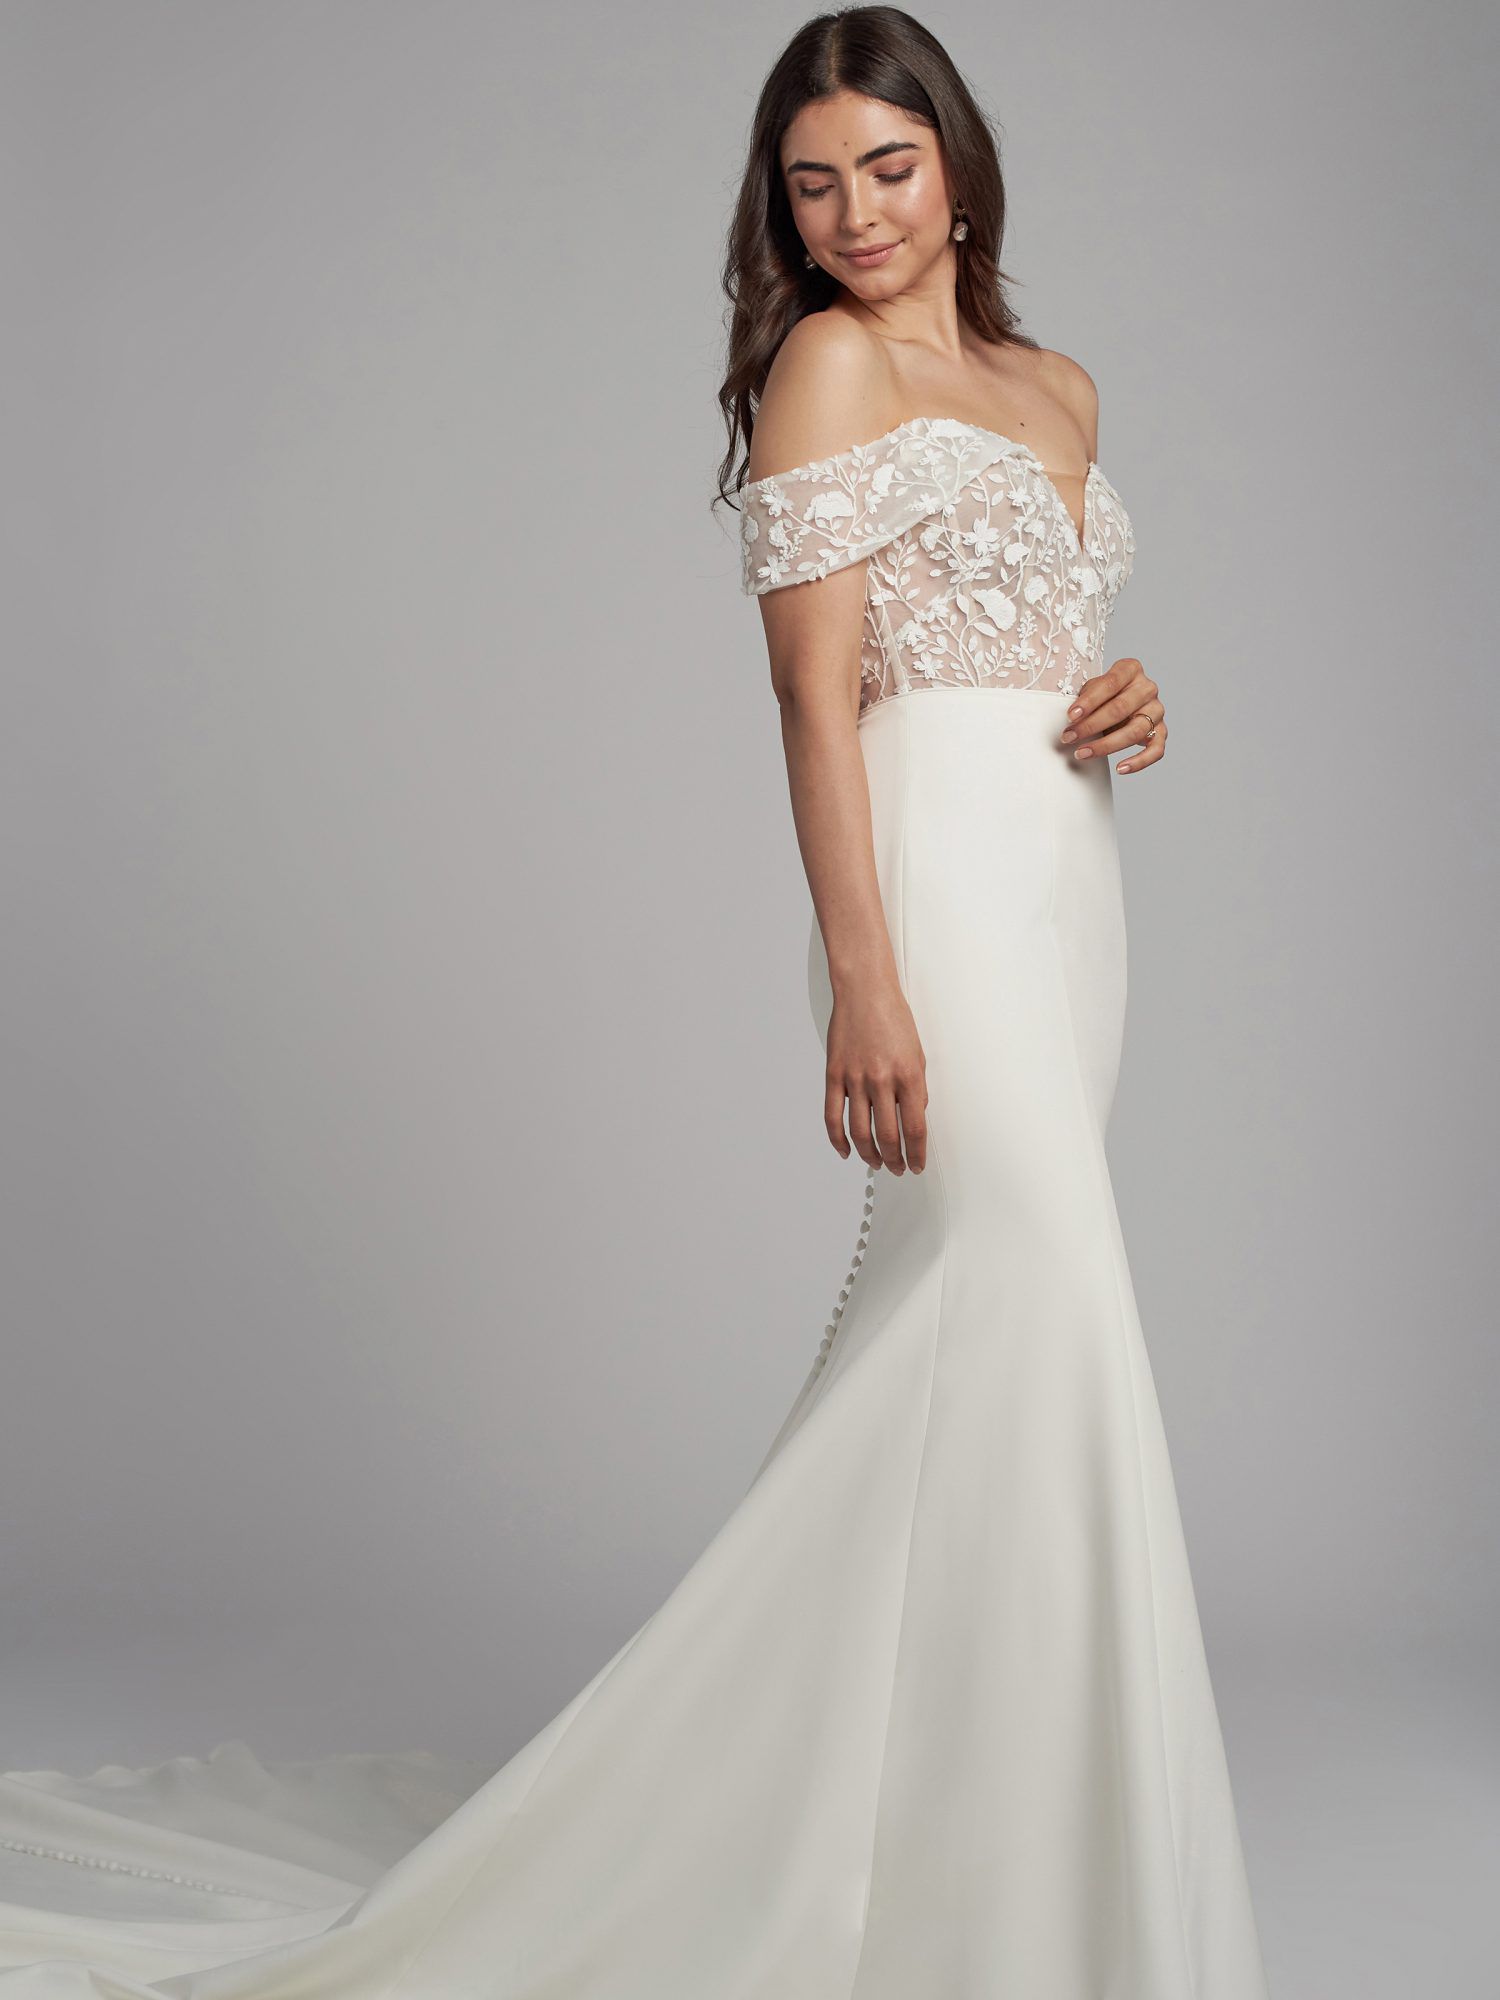 Jenny by Jenny Yoo off-the-shoulder deep sweetheart neckline wedding dress fall 2022